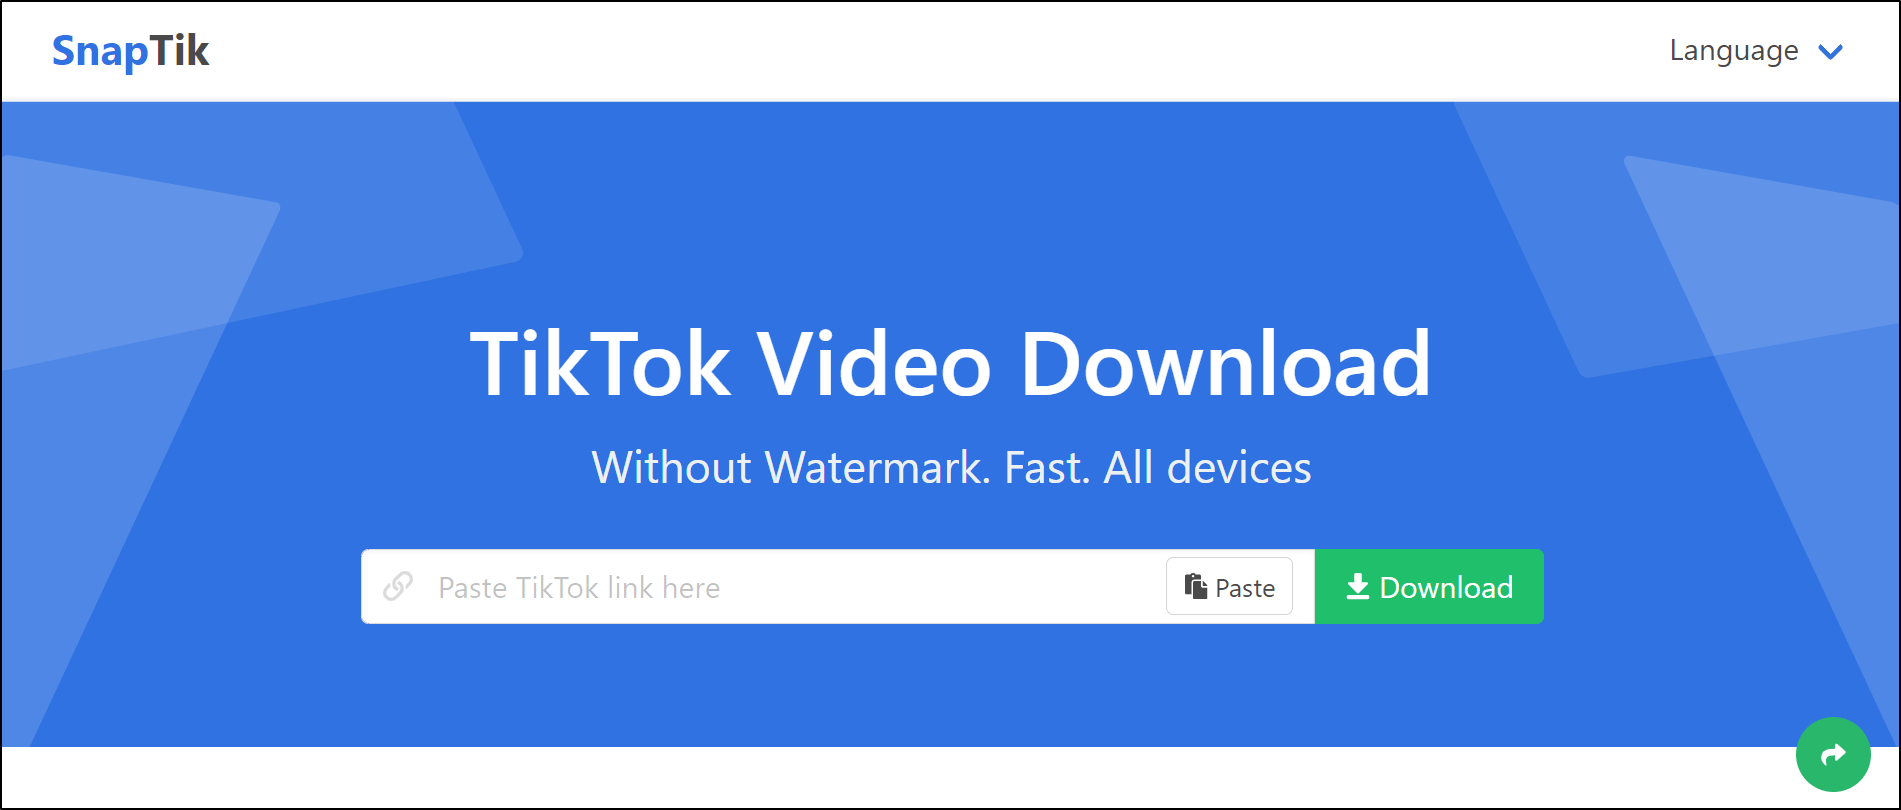 copy TikTok video link on PC web browser to save or download through TikTok website